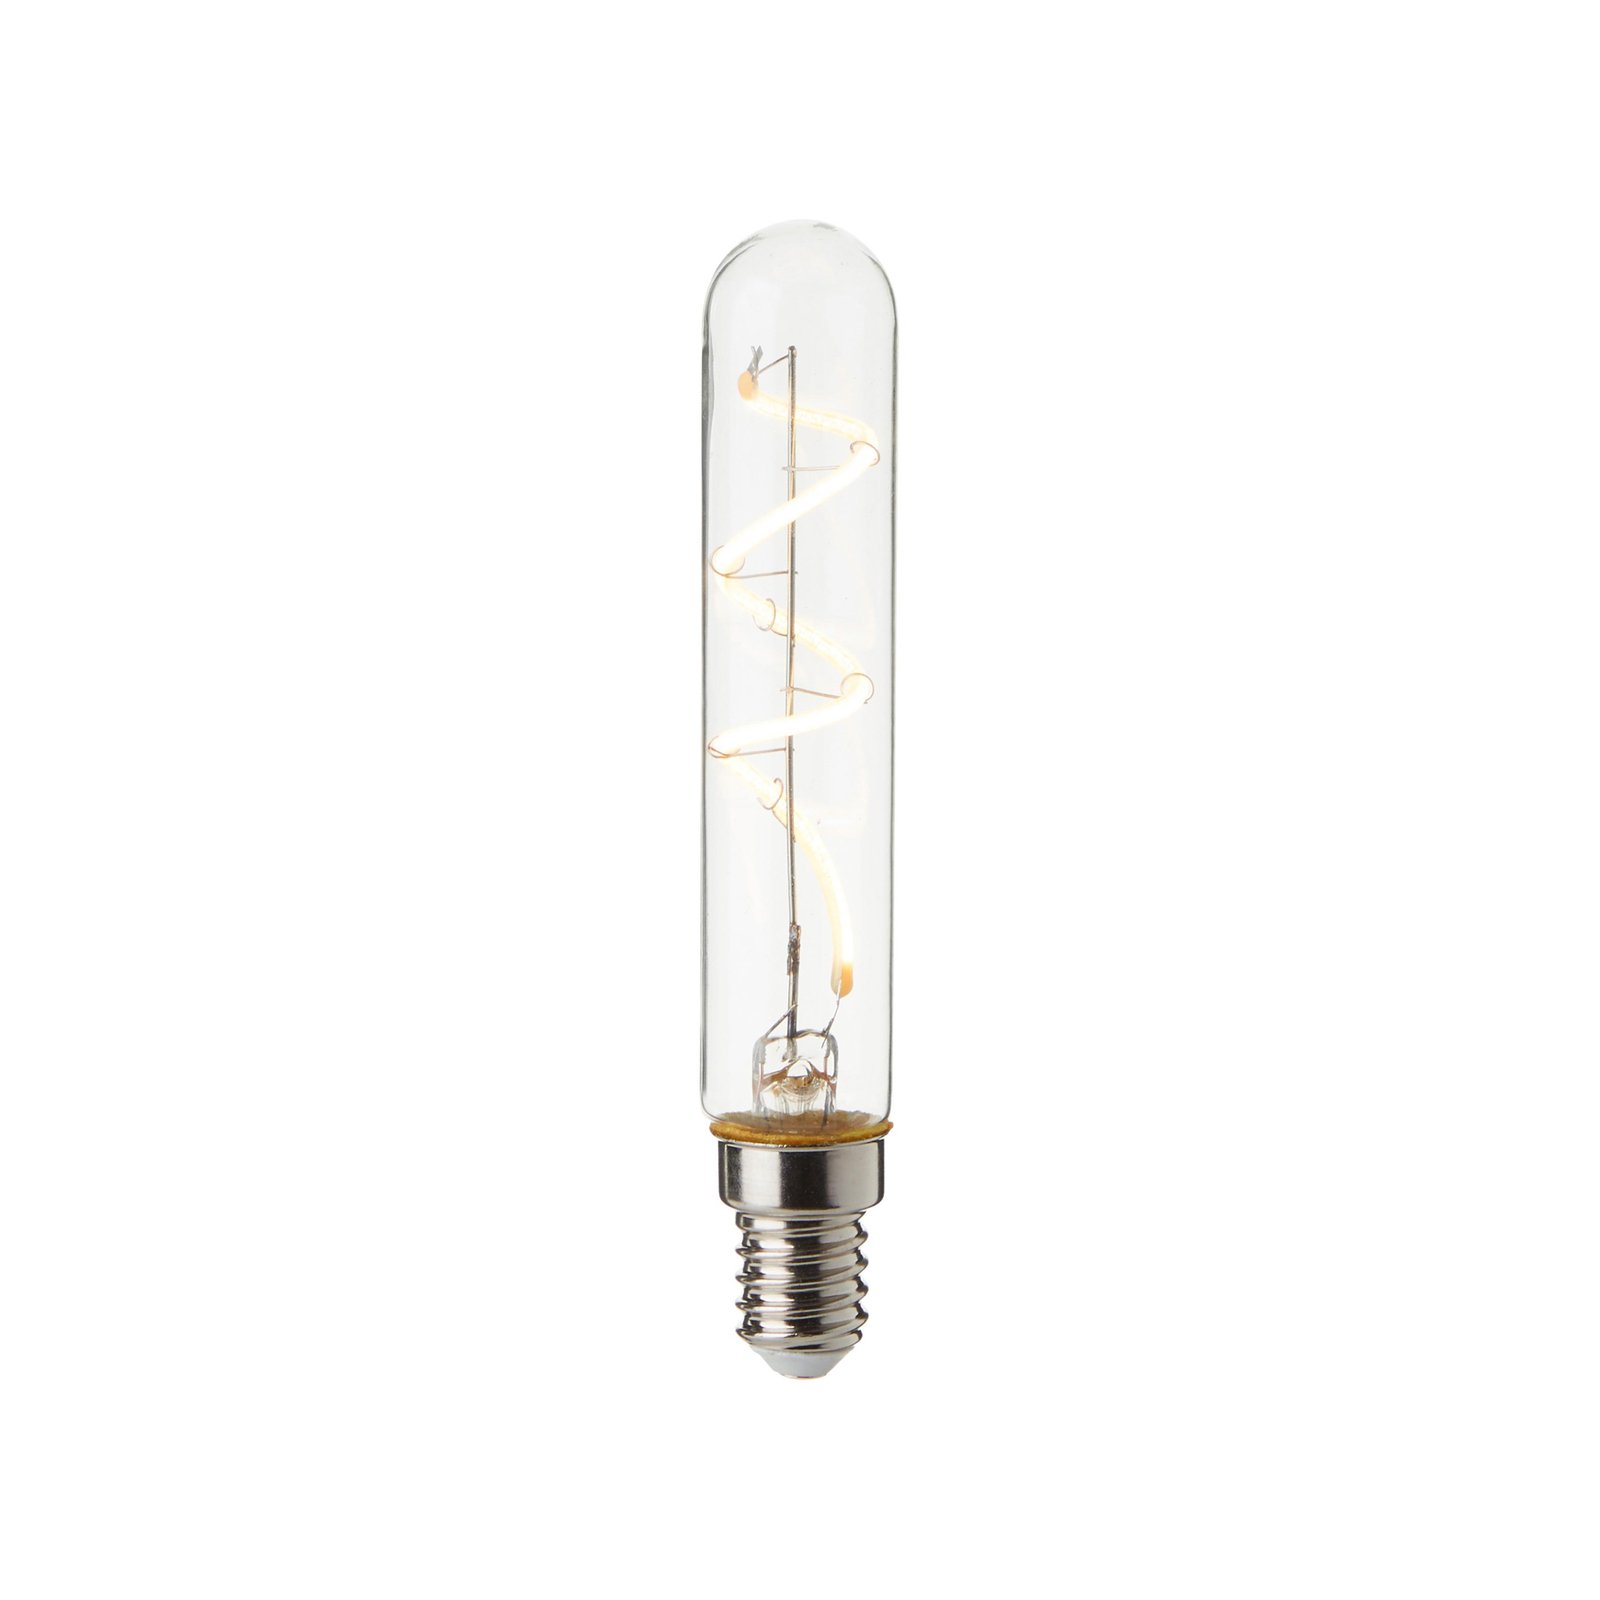 LED lamp E14 3,7 W gloeidraad helder 3.000 K